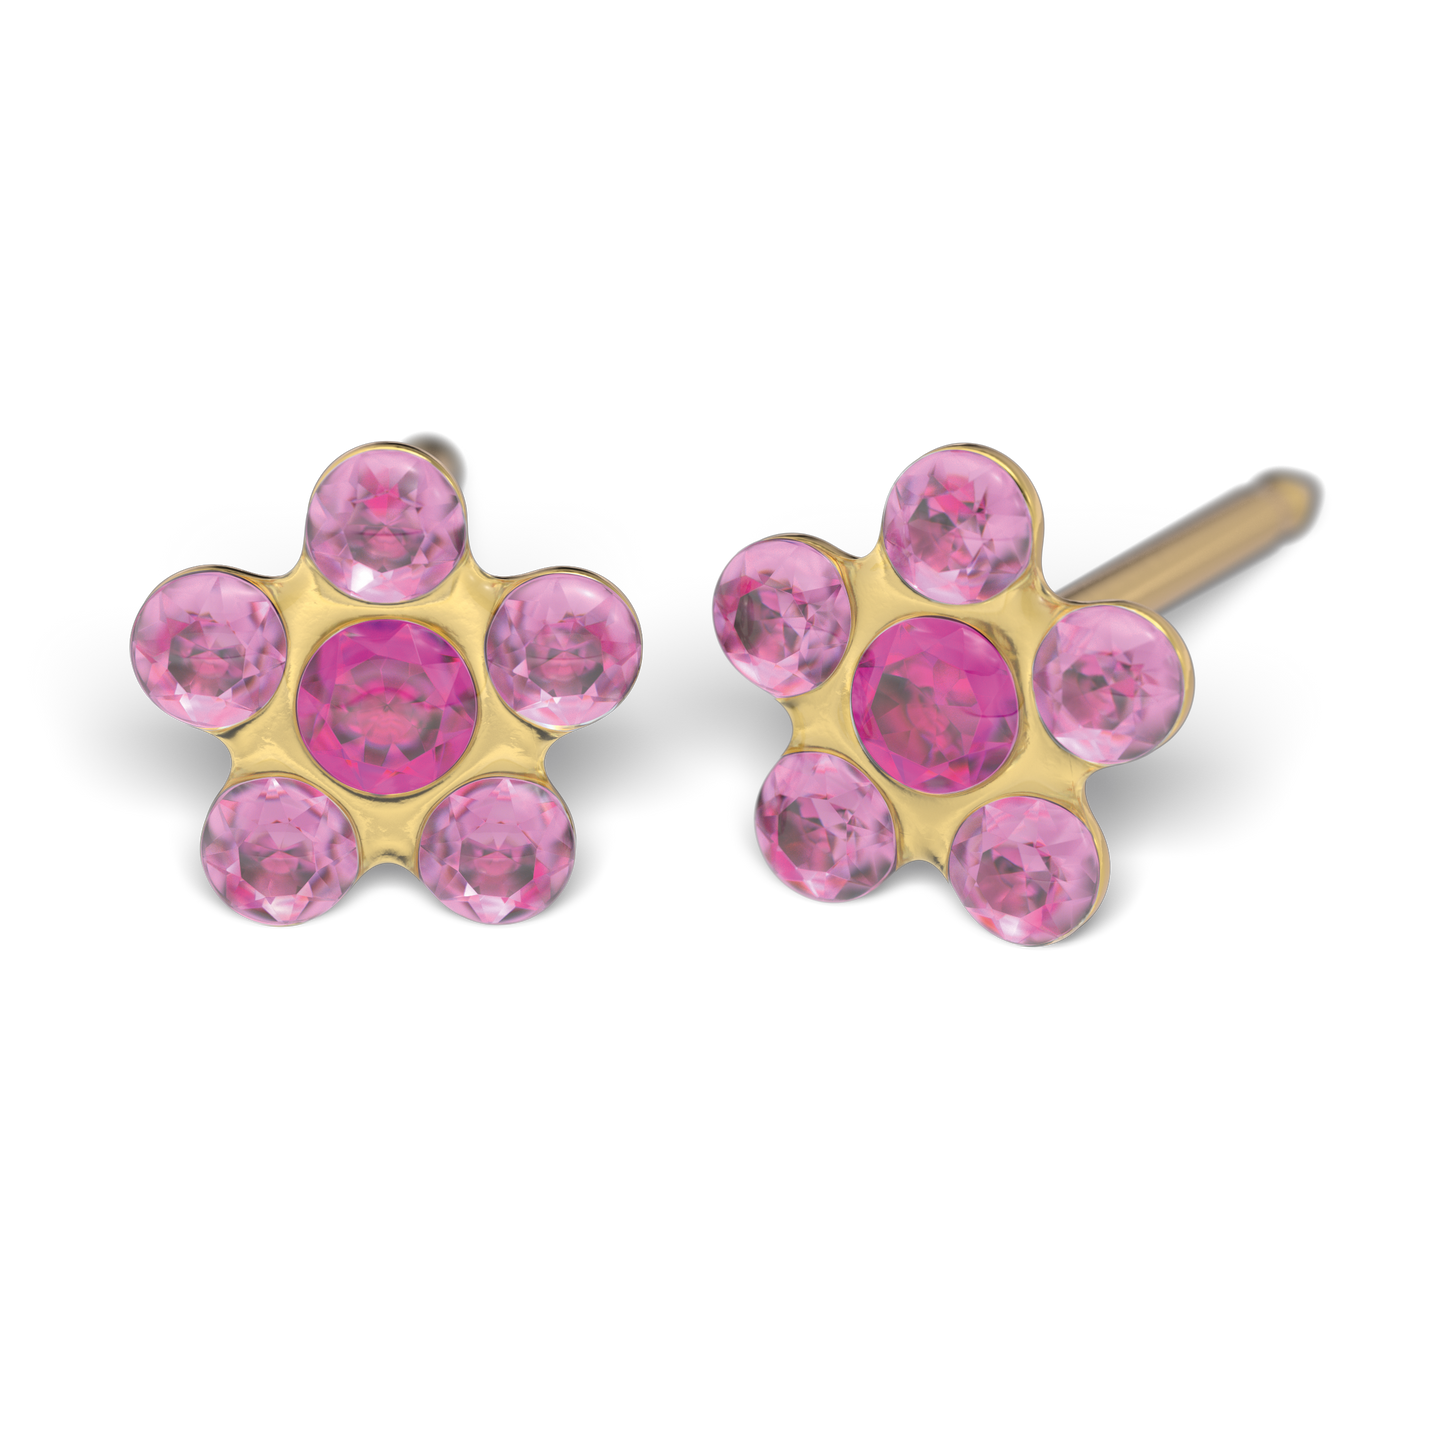 Successor children's Studex Tiny Tips SENSITIVE EARS ear studs flower pink